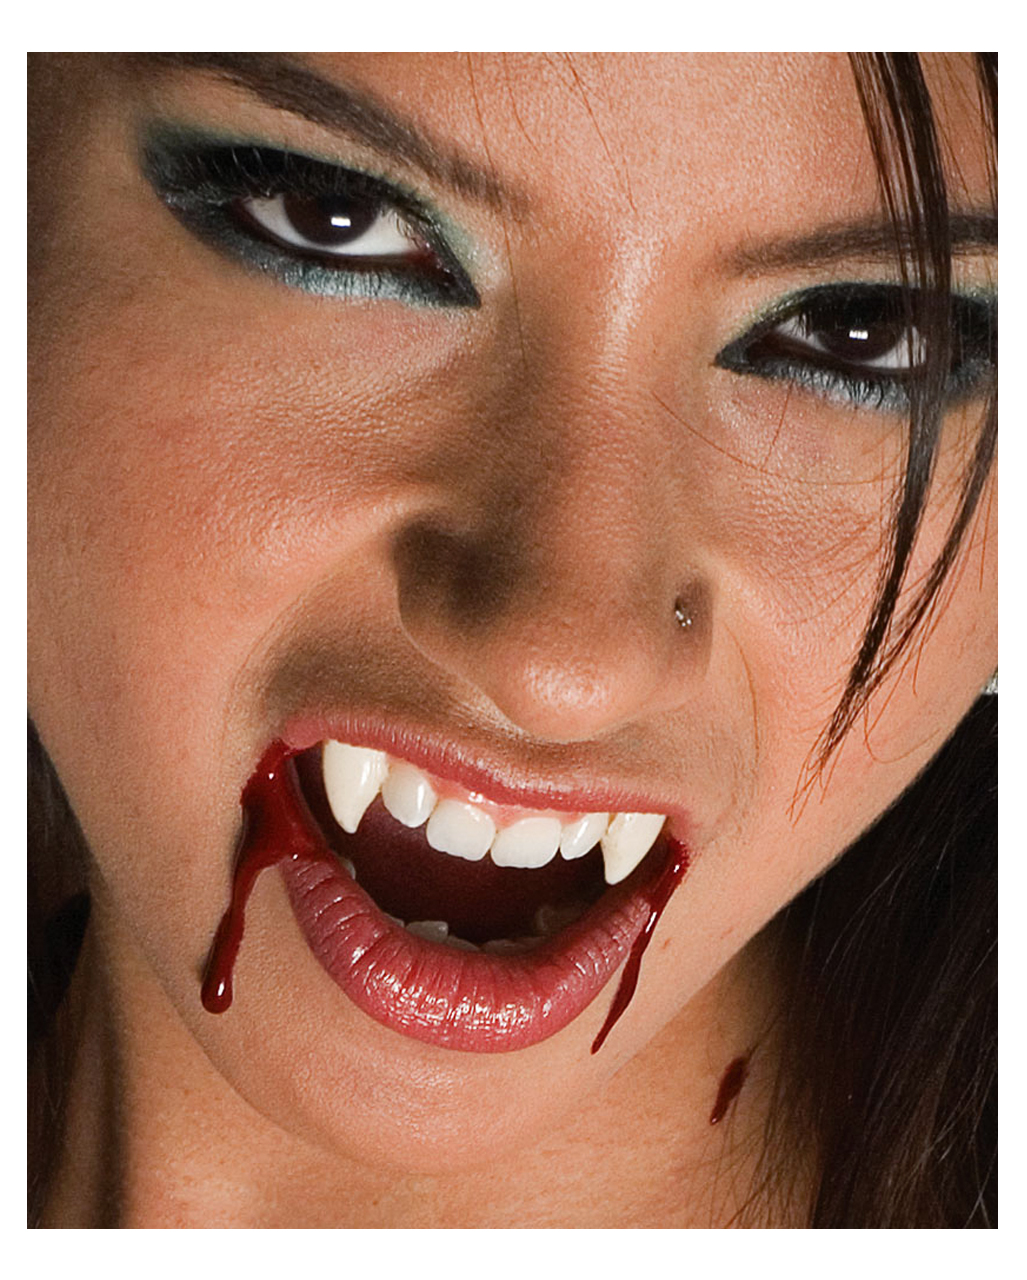 vampire teeth for halloween